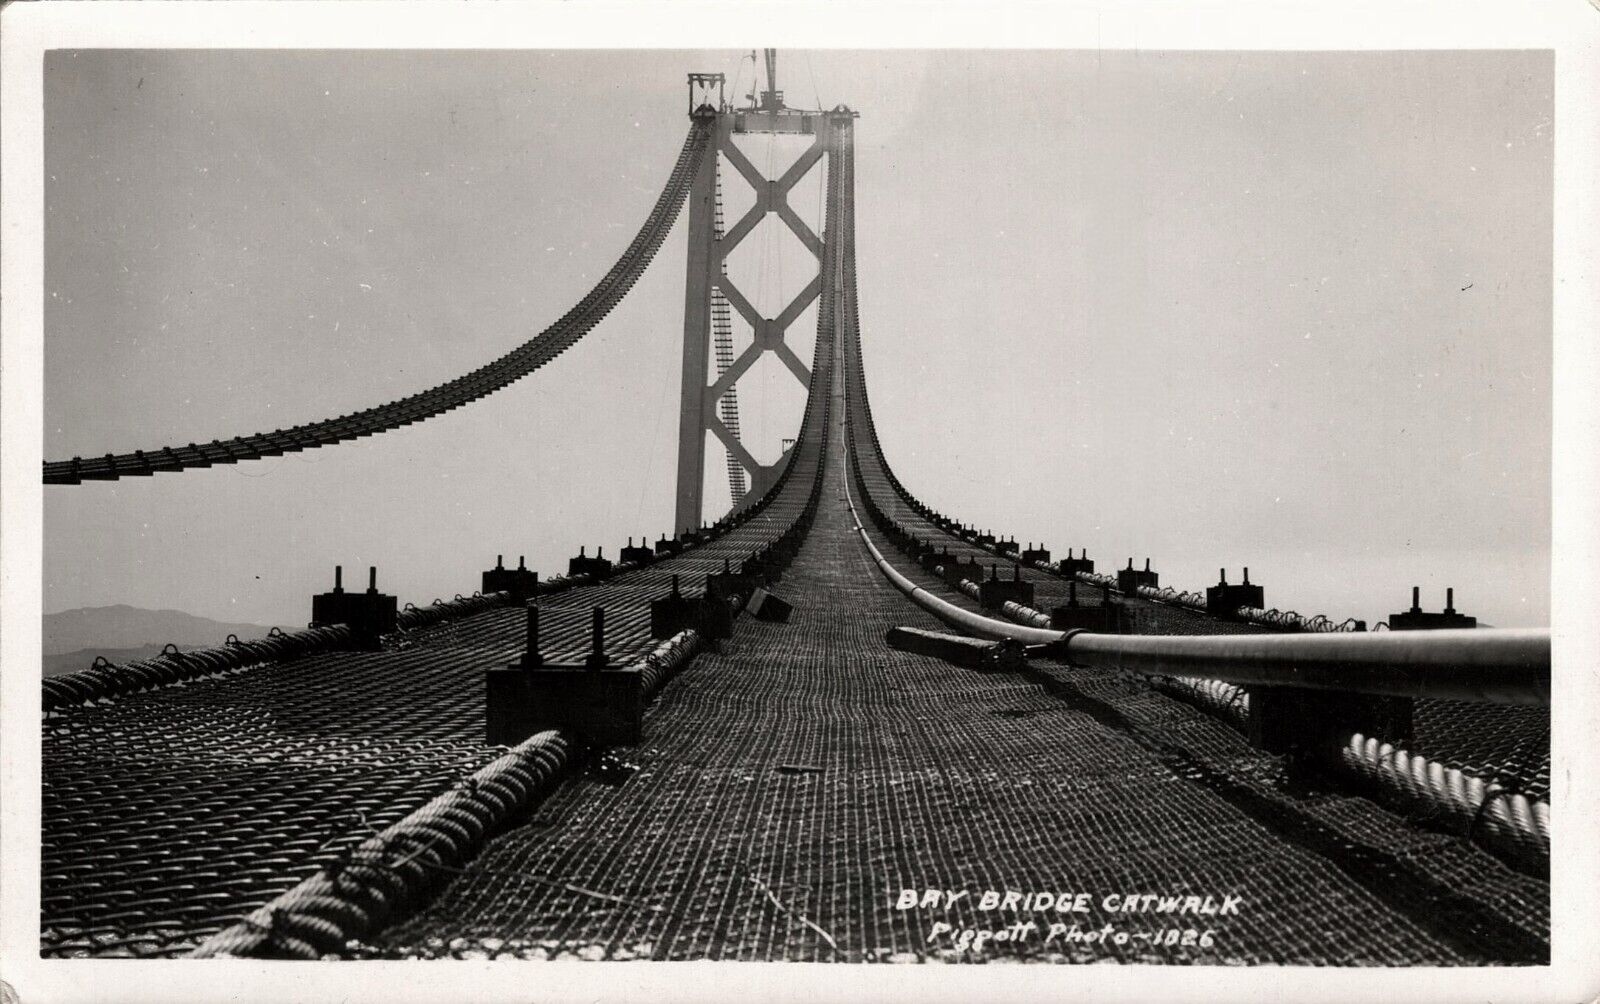 SAN FRANCISCO RPPC - BAY BRIDGE CATWALK - PIGGOTT PHOTO